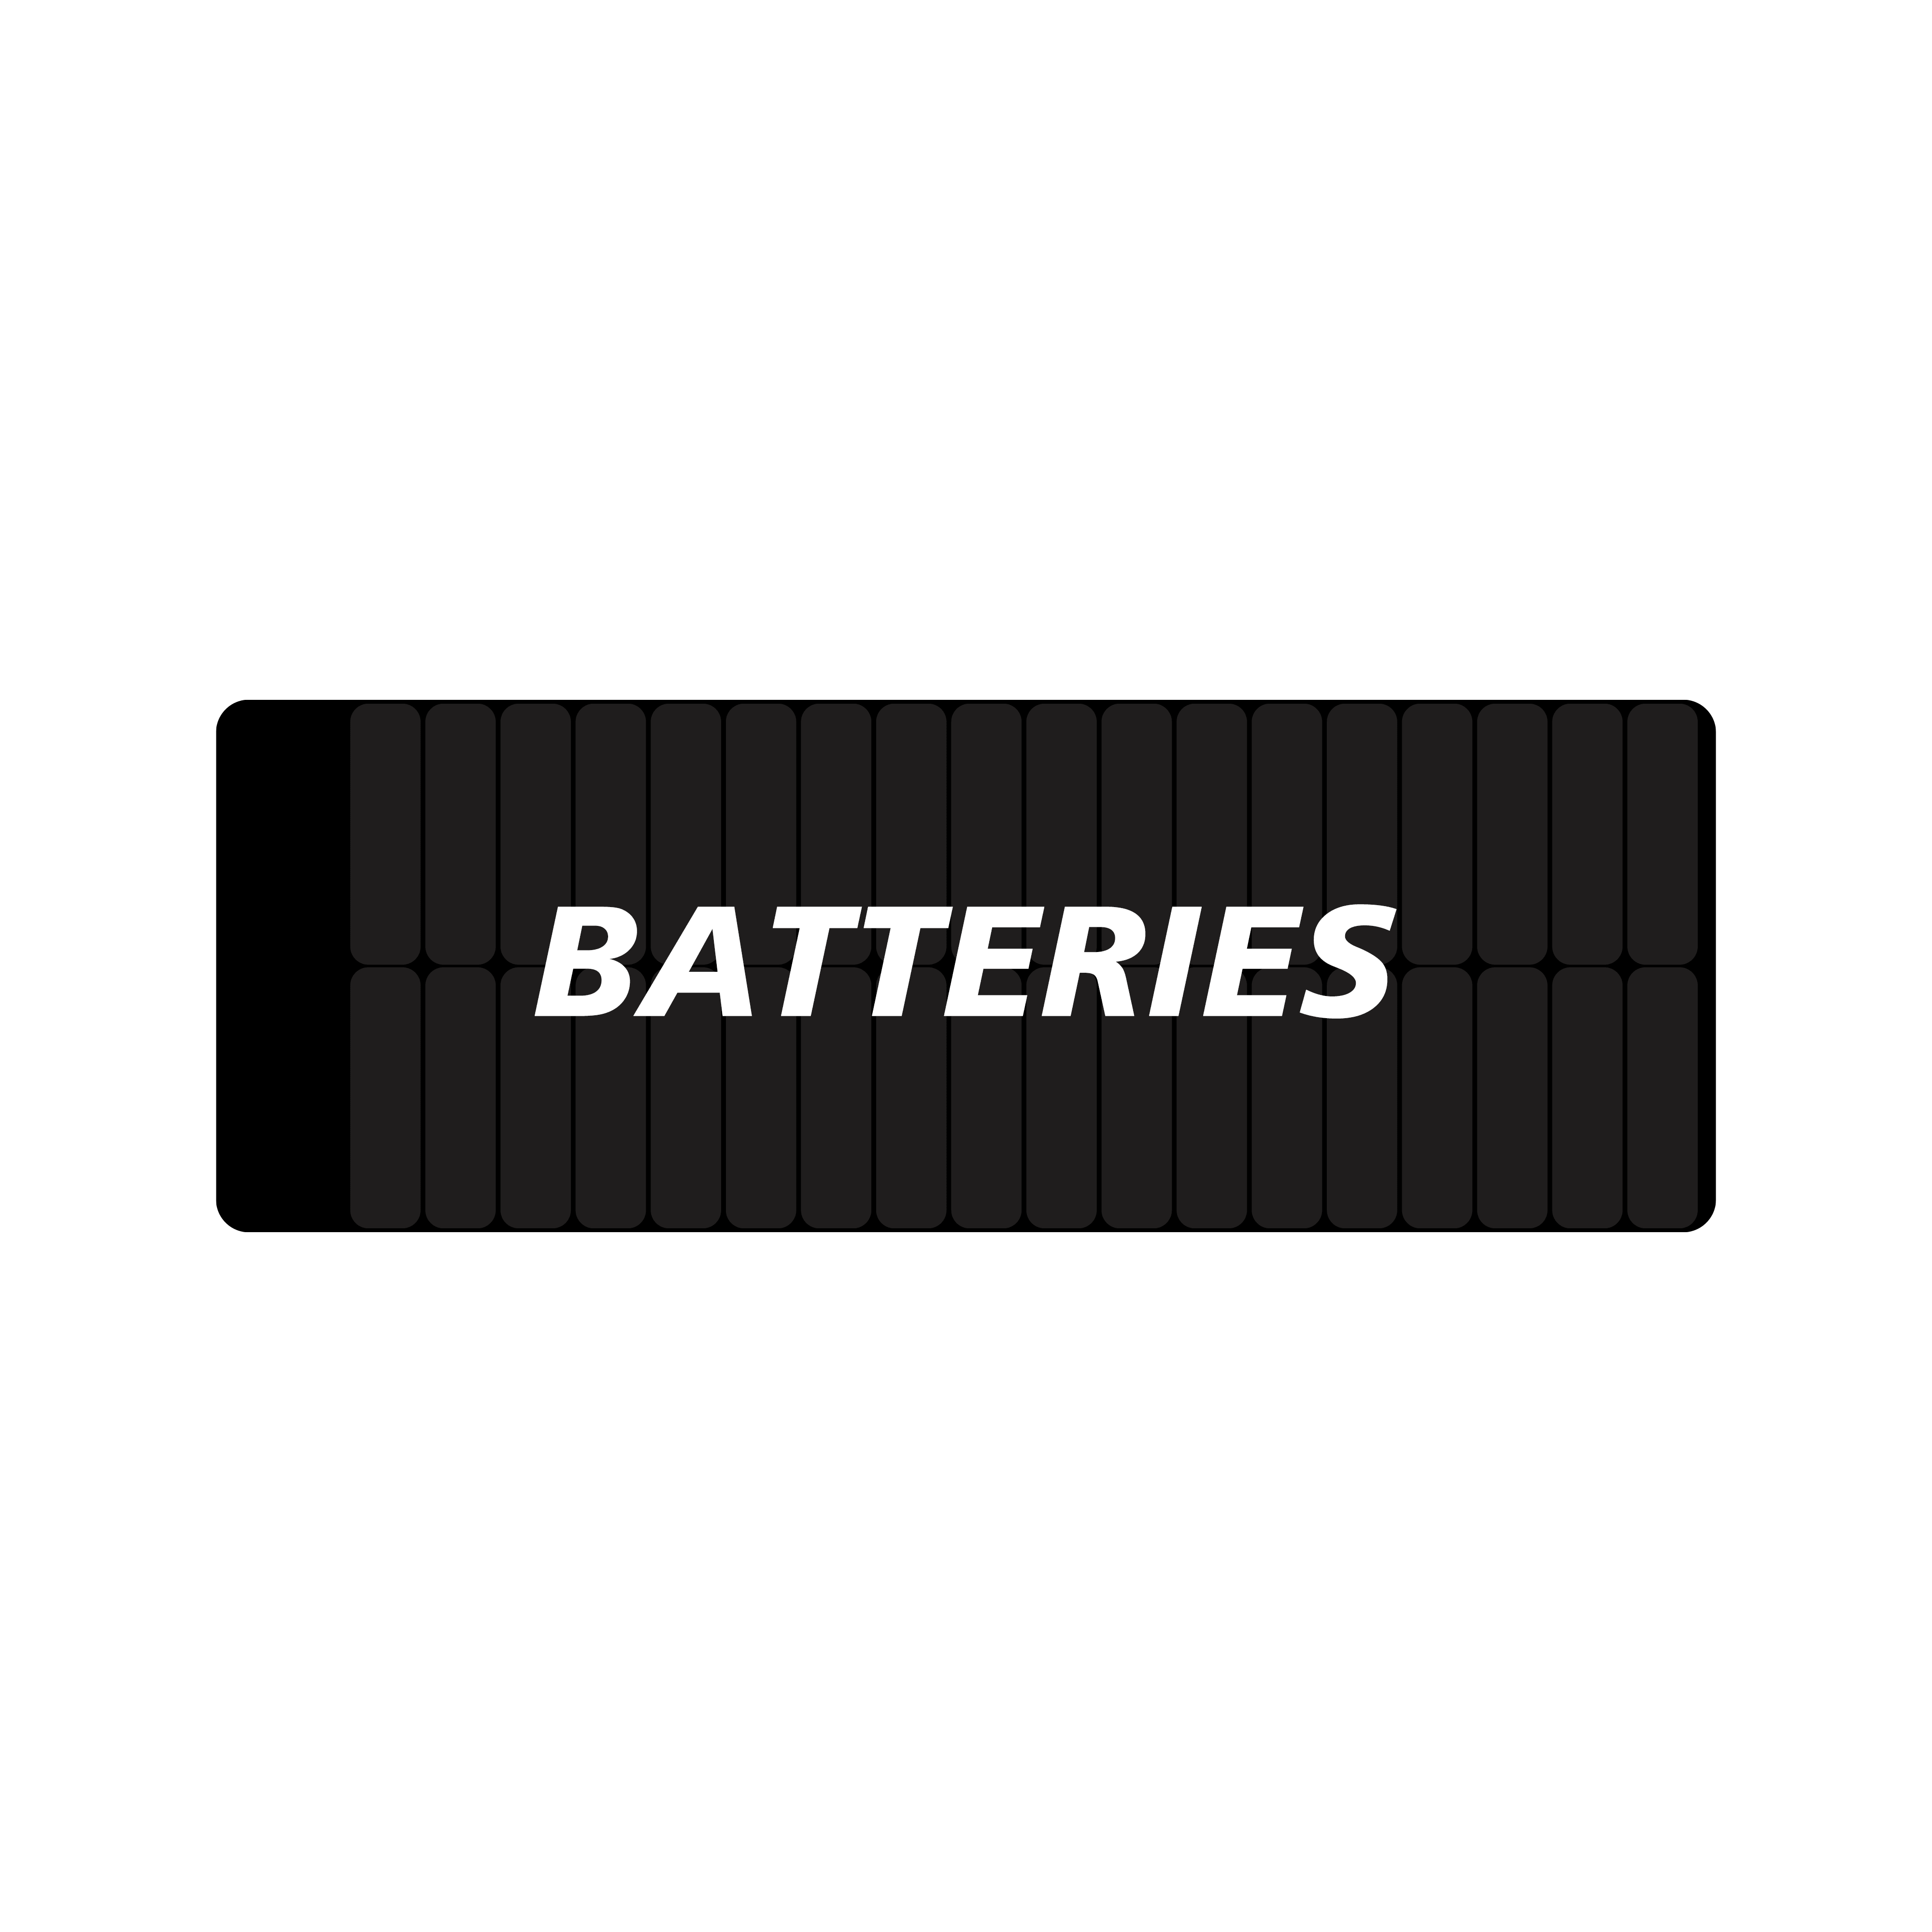 Batteries - Meepo Board